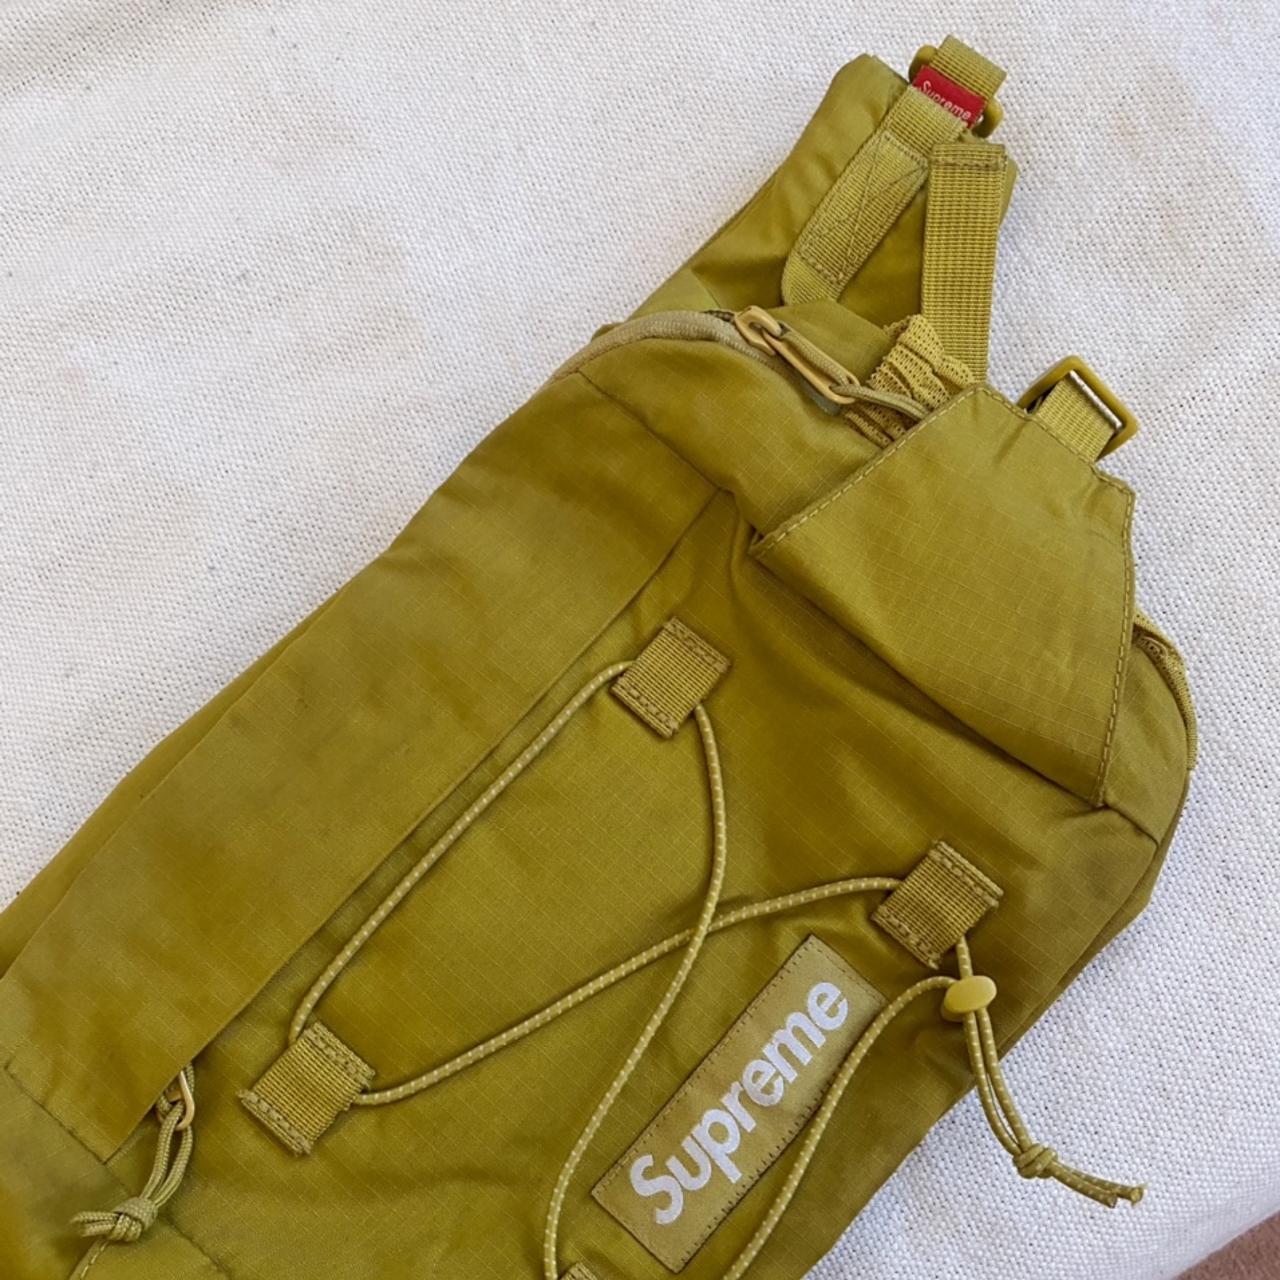 Supreme Waist Bag (SS17) Acid Green Pre-Owned